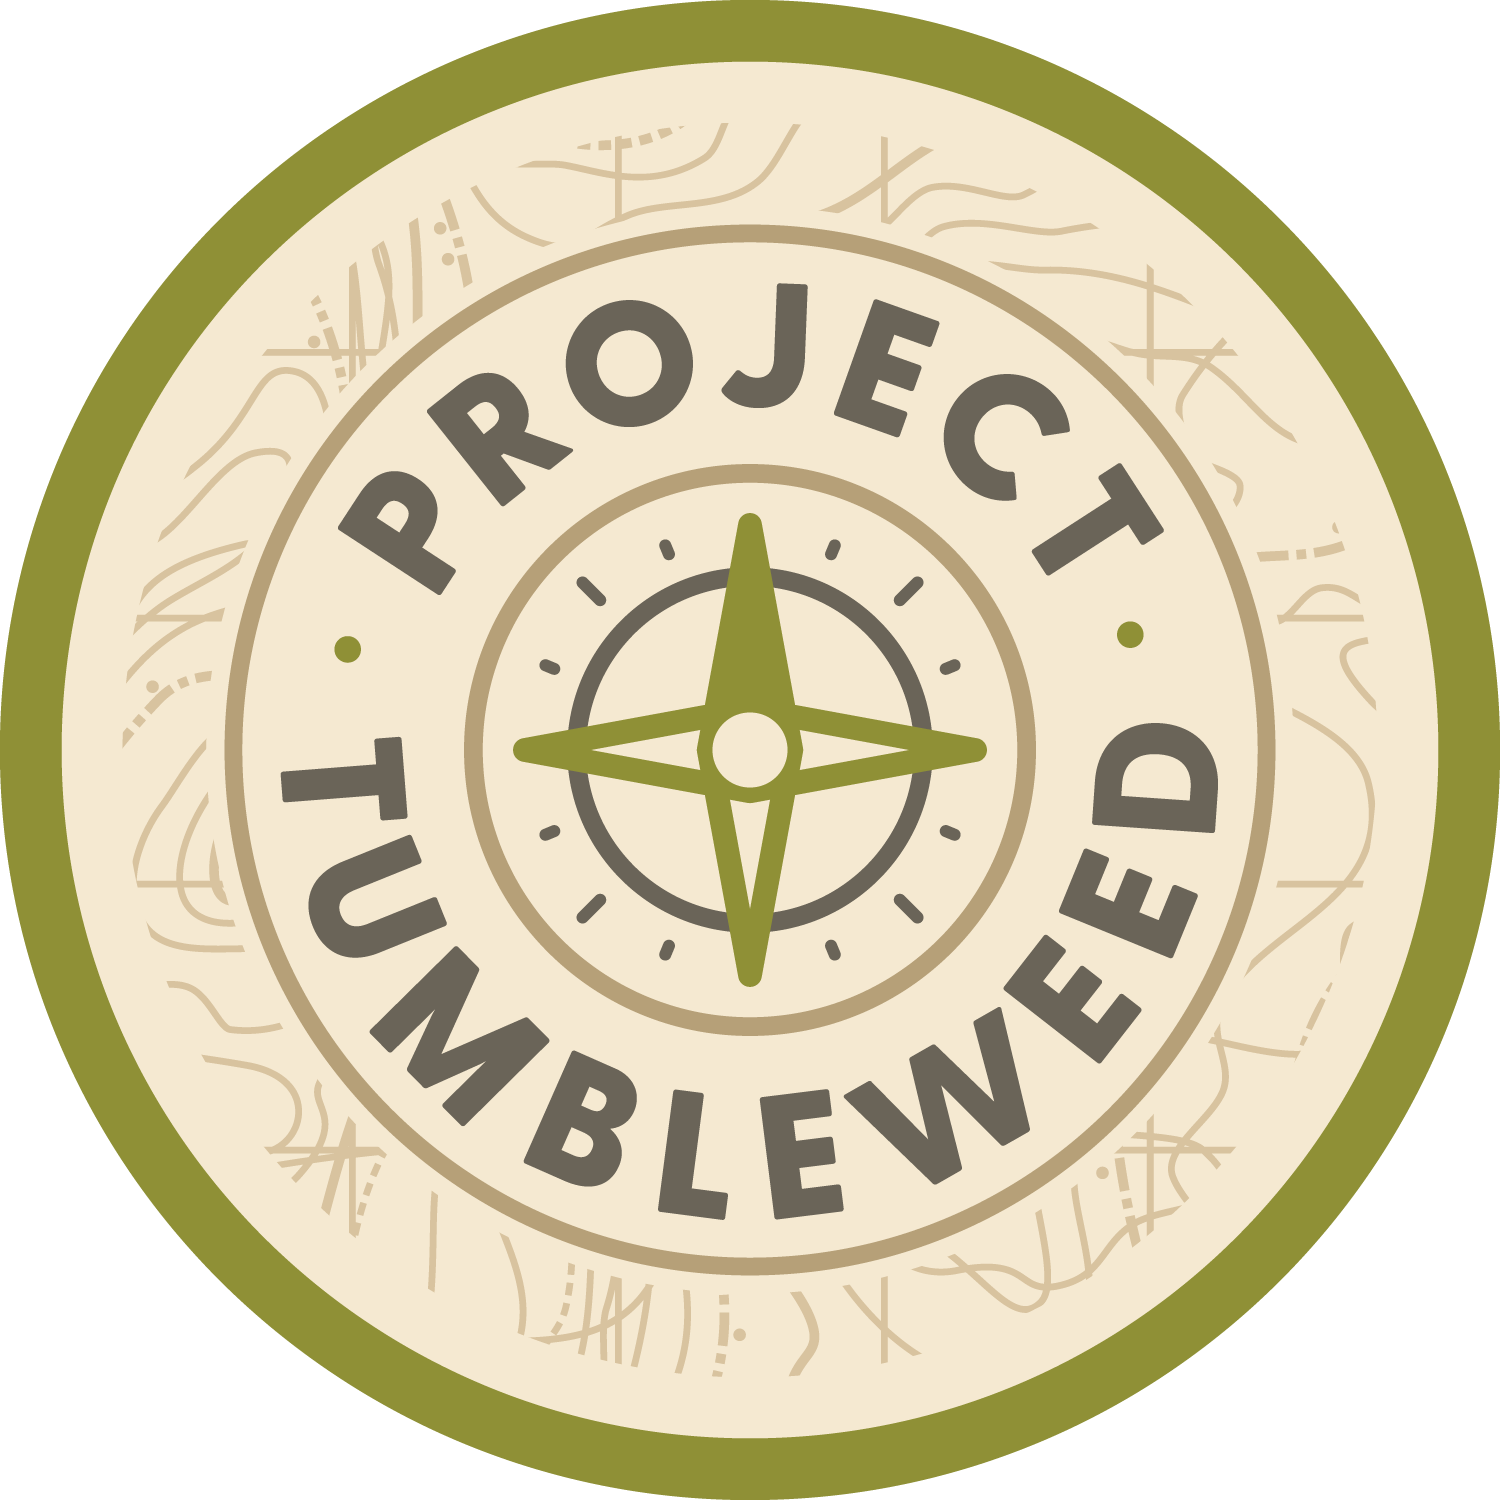 Project Tumbleweed